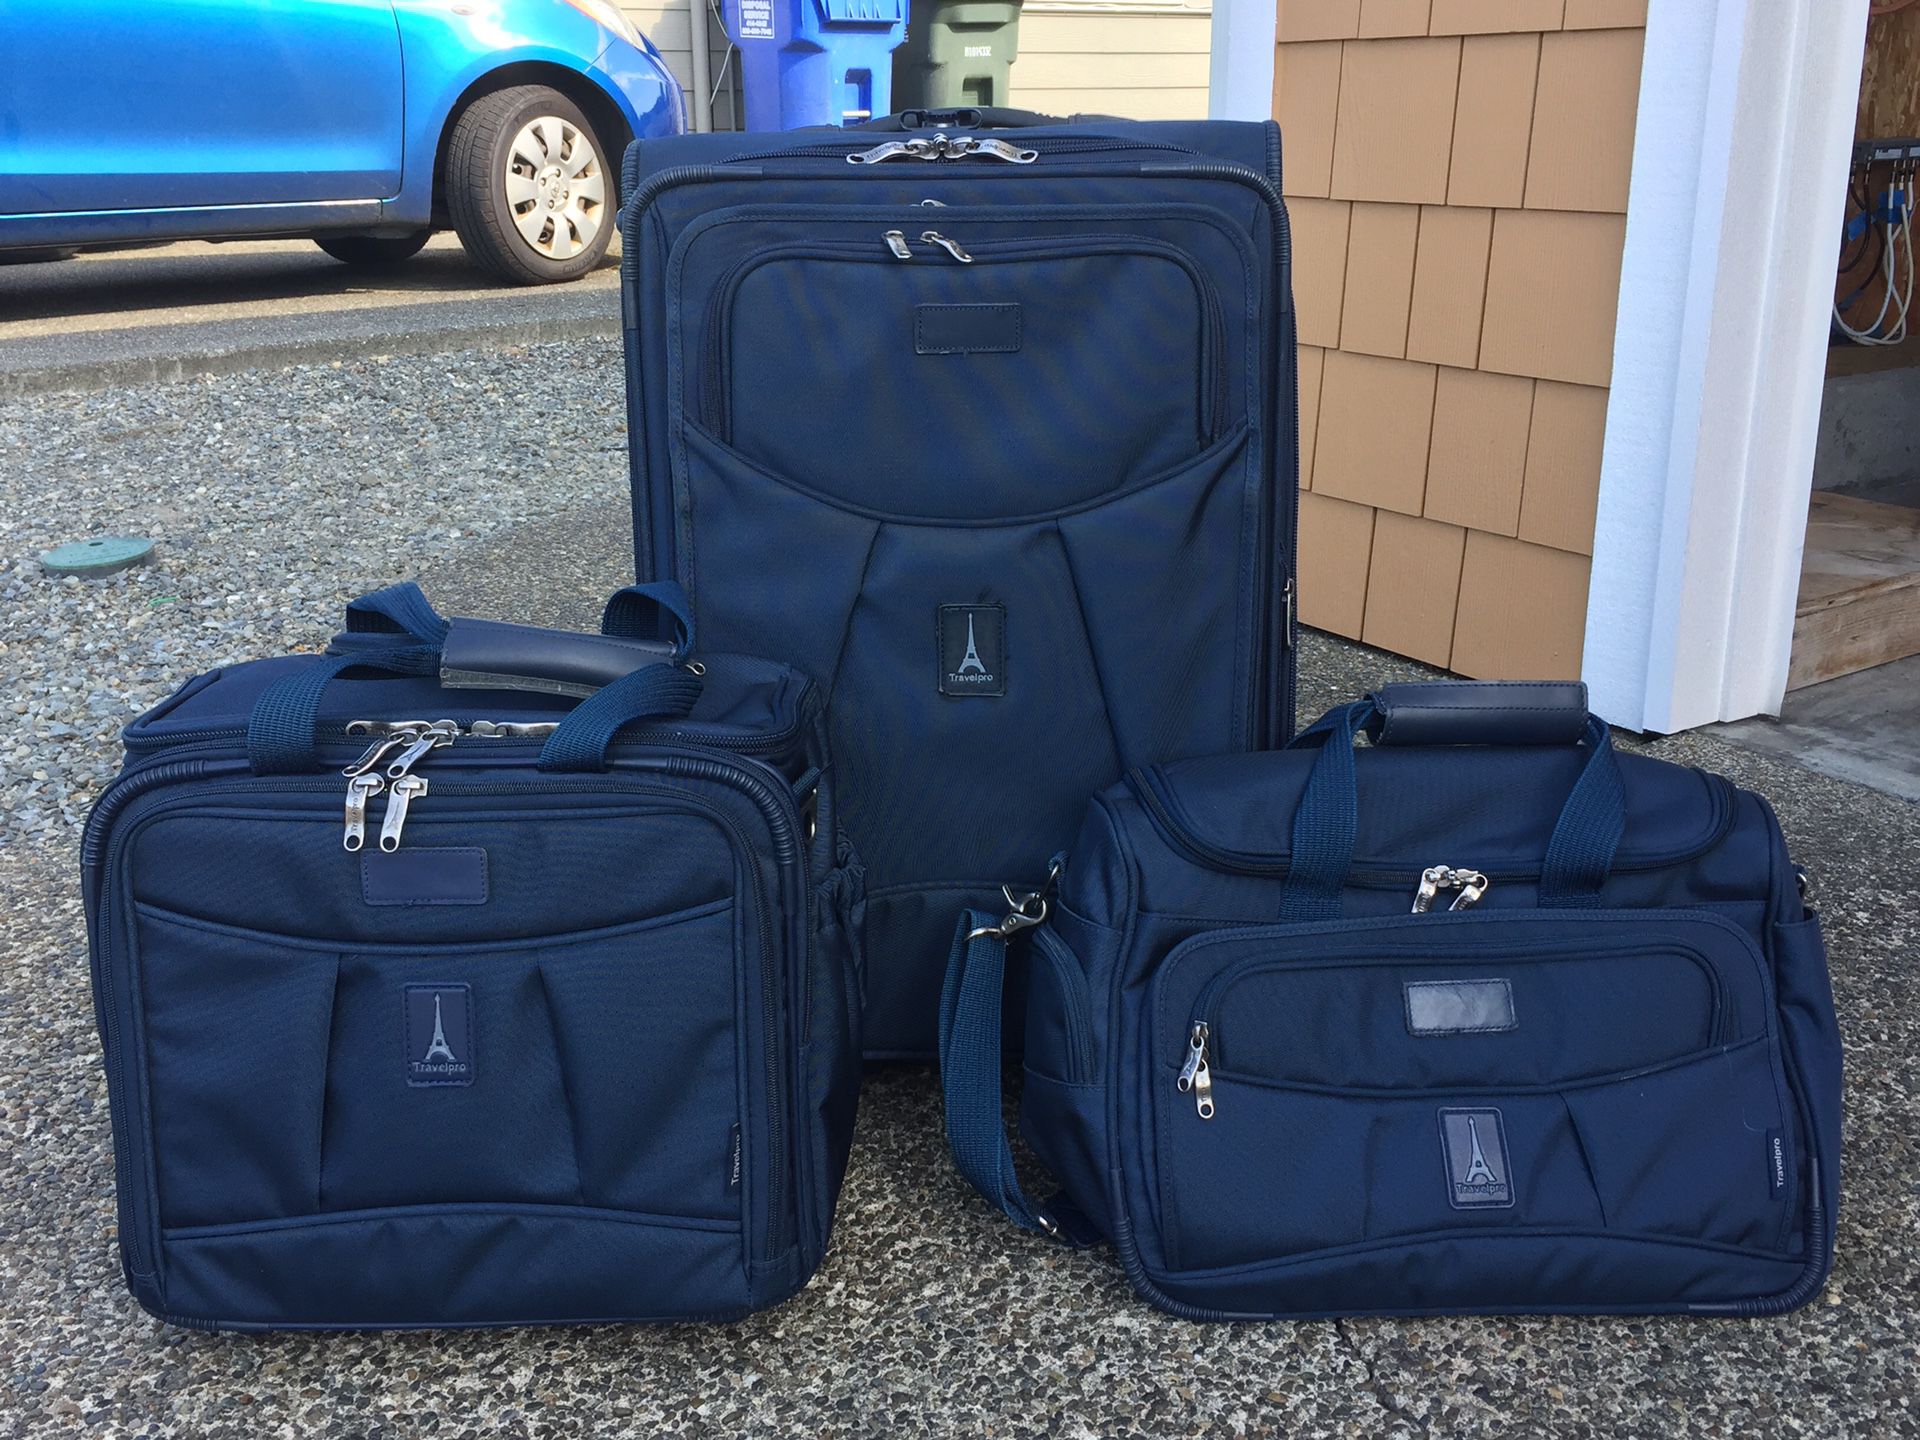 Travelpro 3 piece luggage set